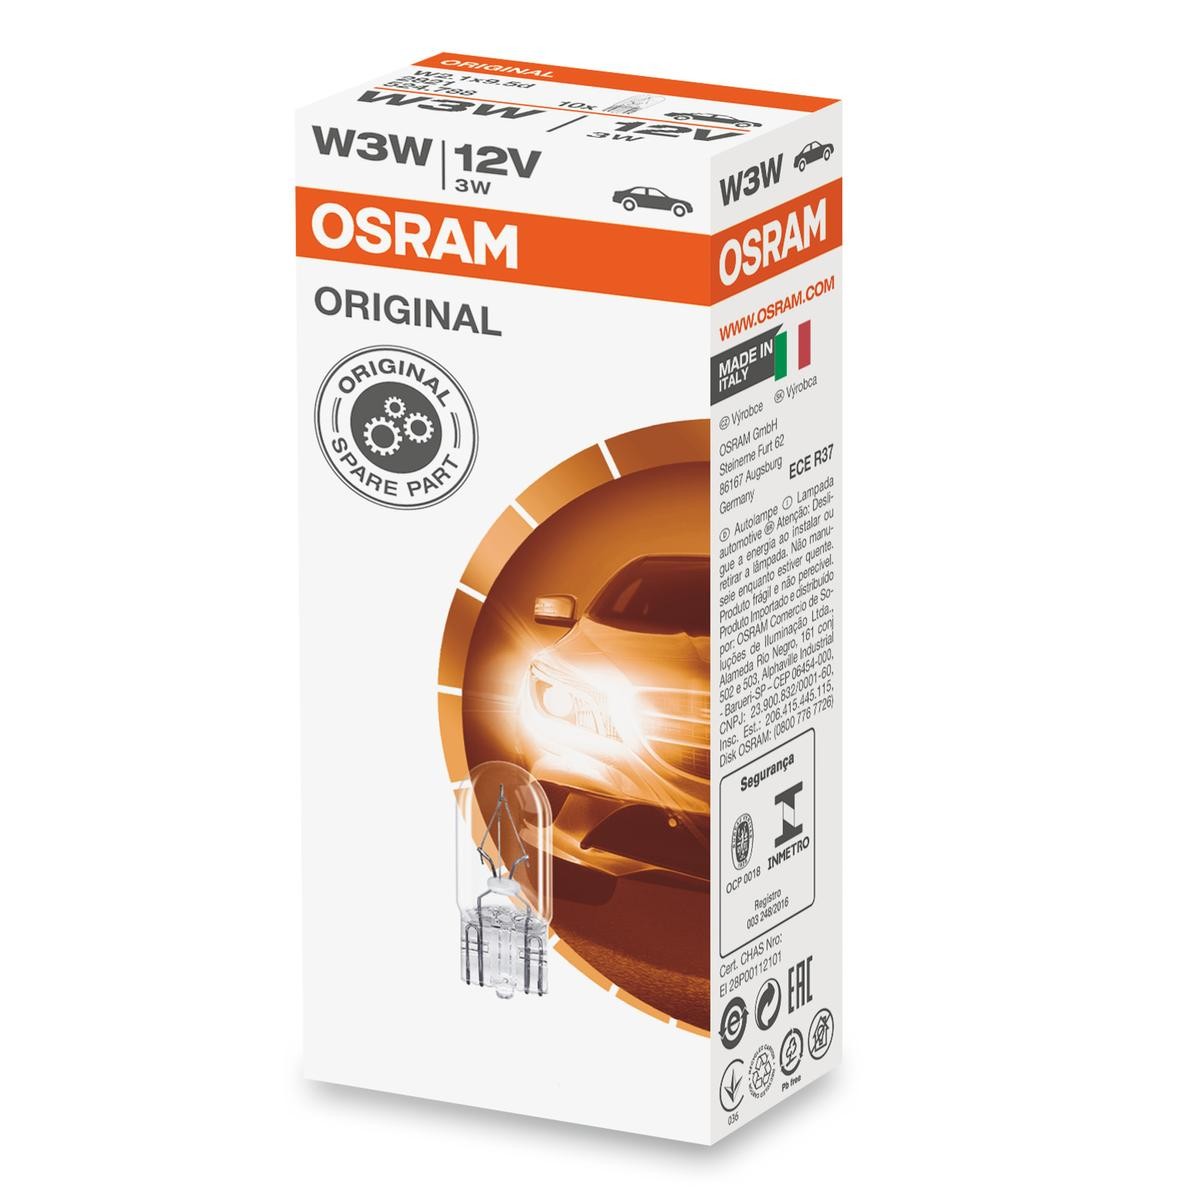 W3W OSRAM ORIGINAL LINE 12V 3W, W3W Bulb, indicator 2821 buy